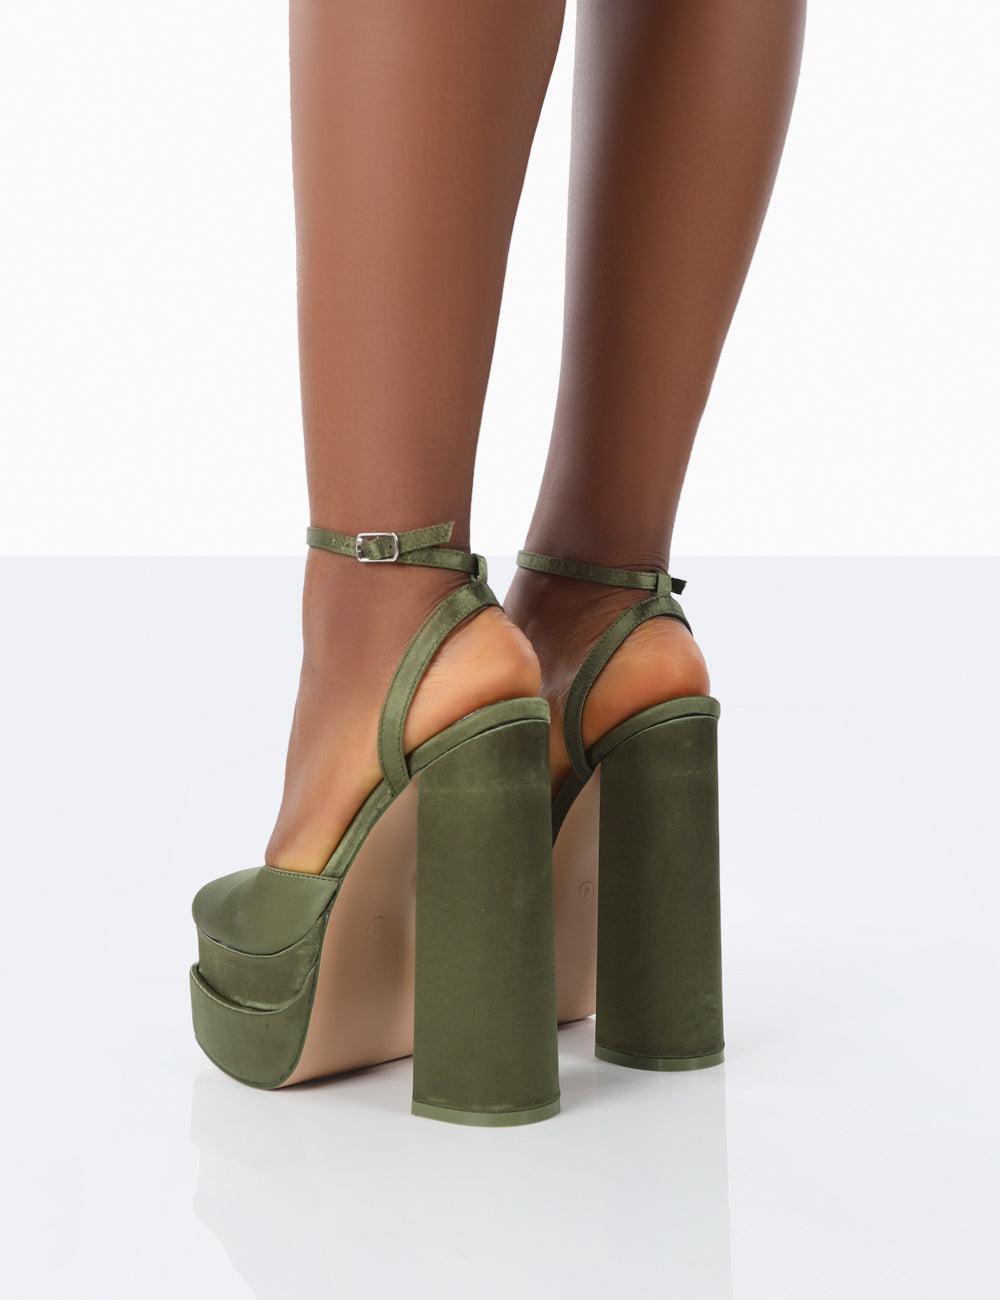 Shop Now Women Beige Solid Party Peep Toe Block Heels – Inc5 Shoes